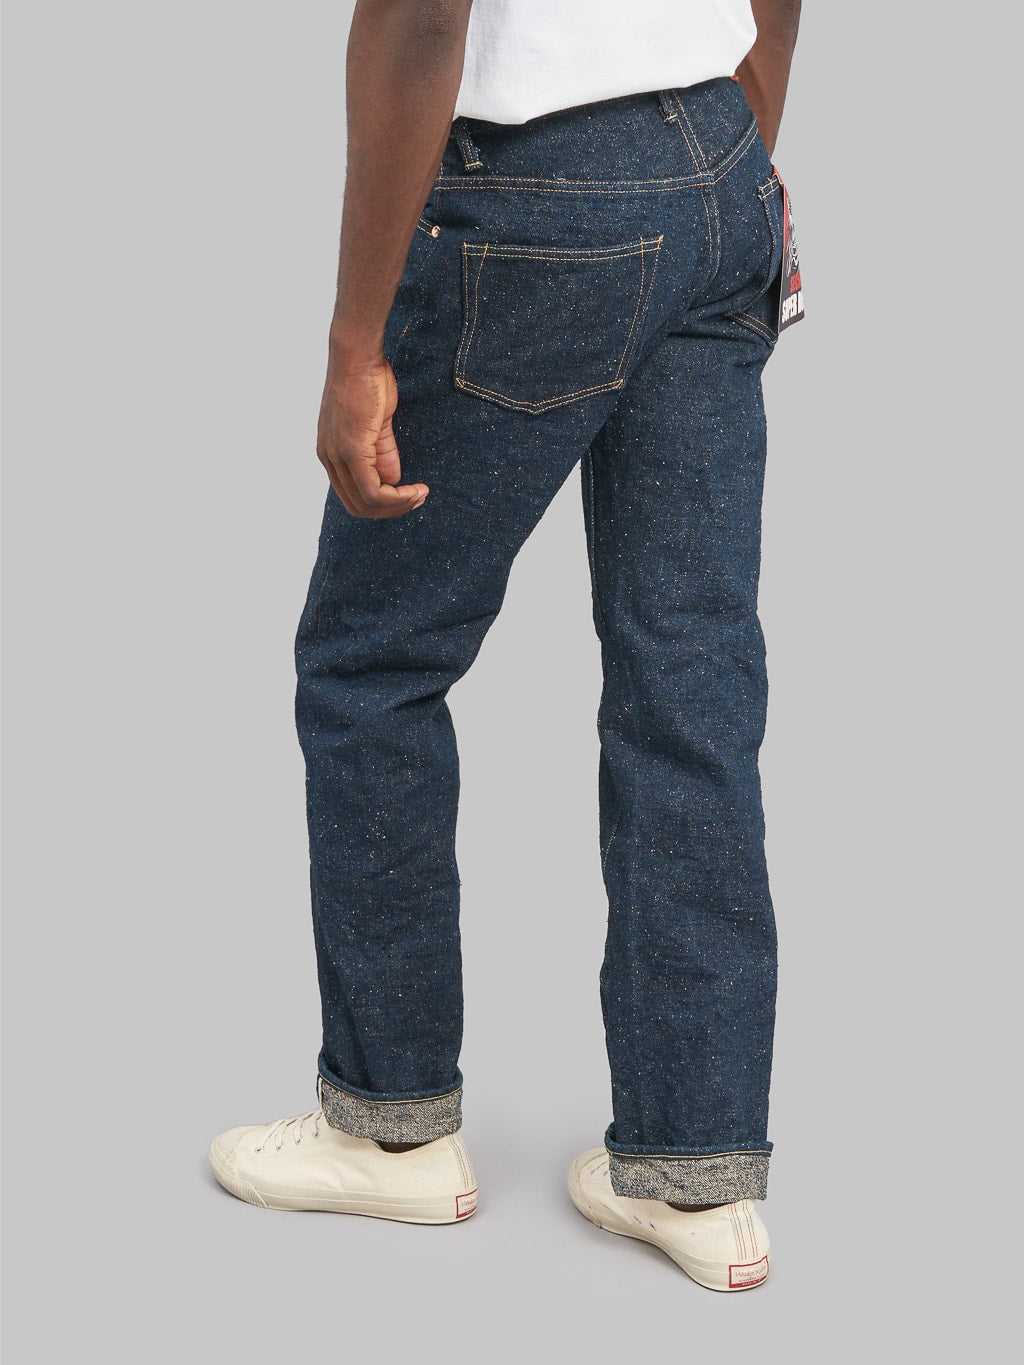 ONI Denim 266SESR "Secret Super Rough" 20oz Relax Straight Jeans